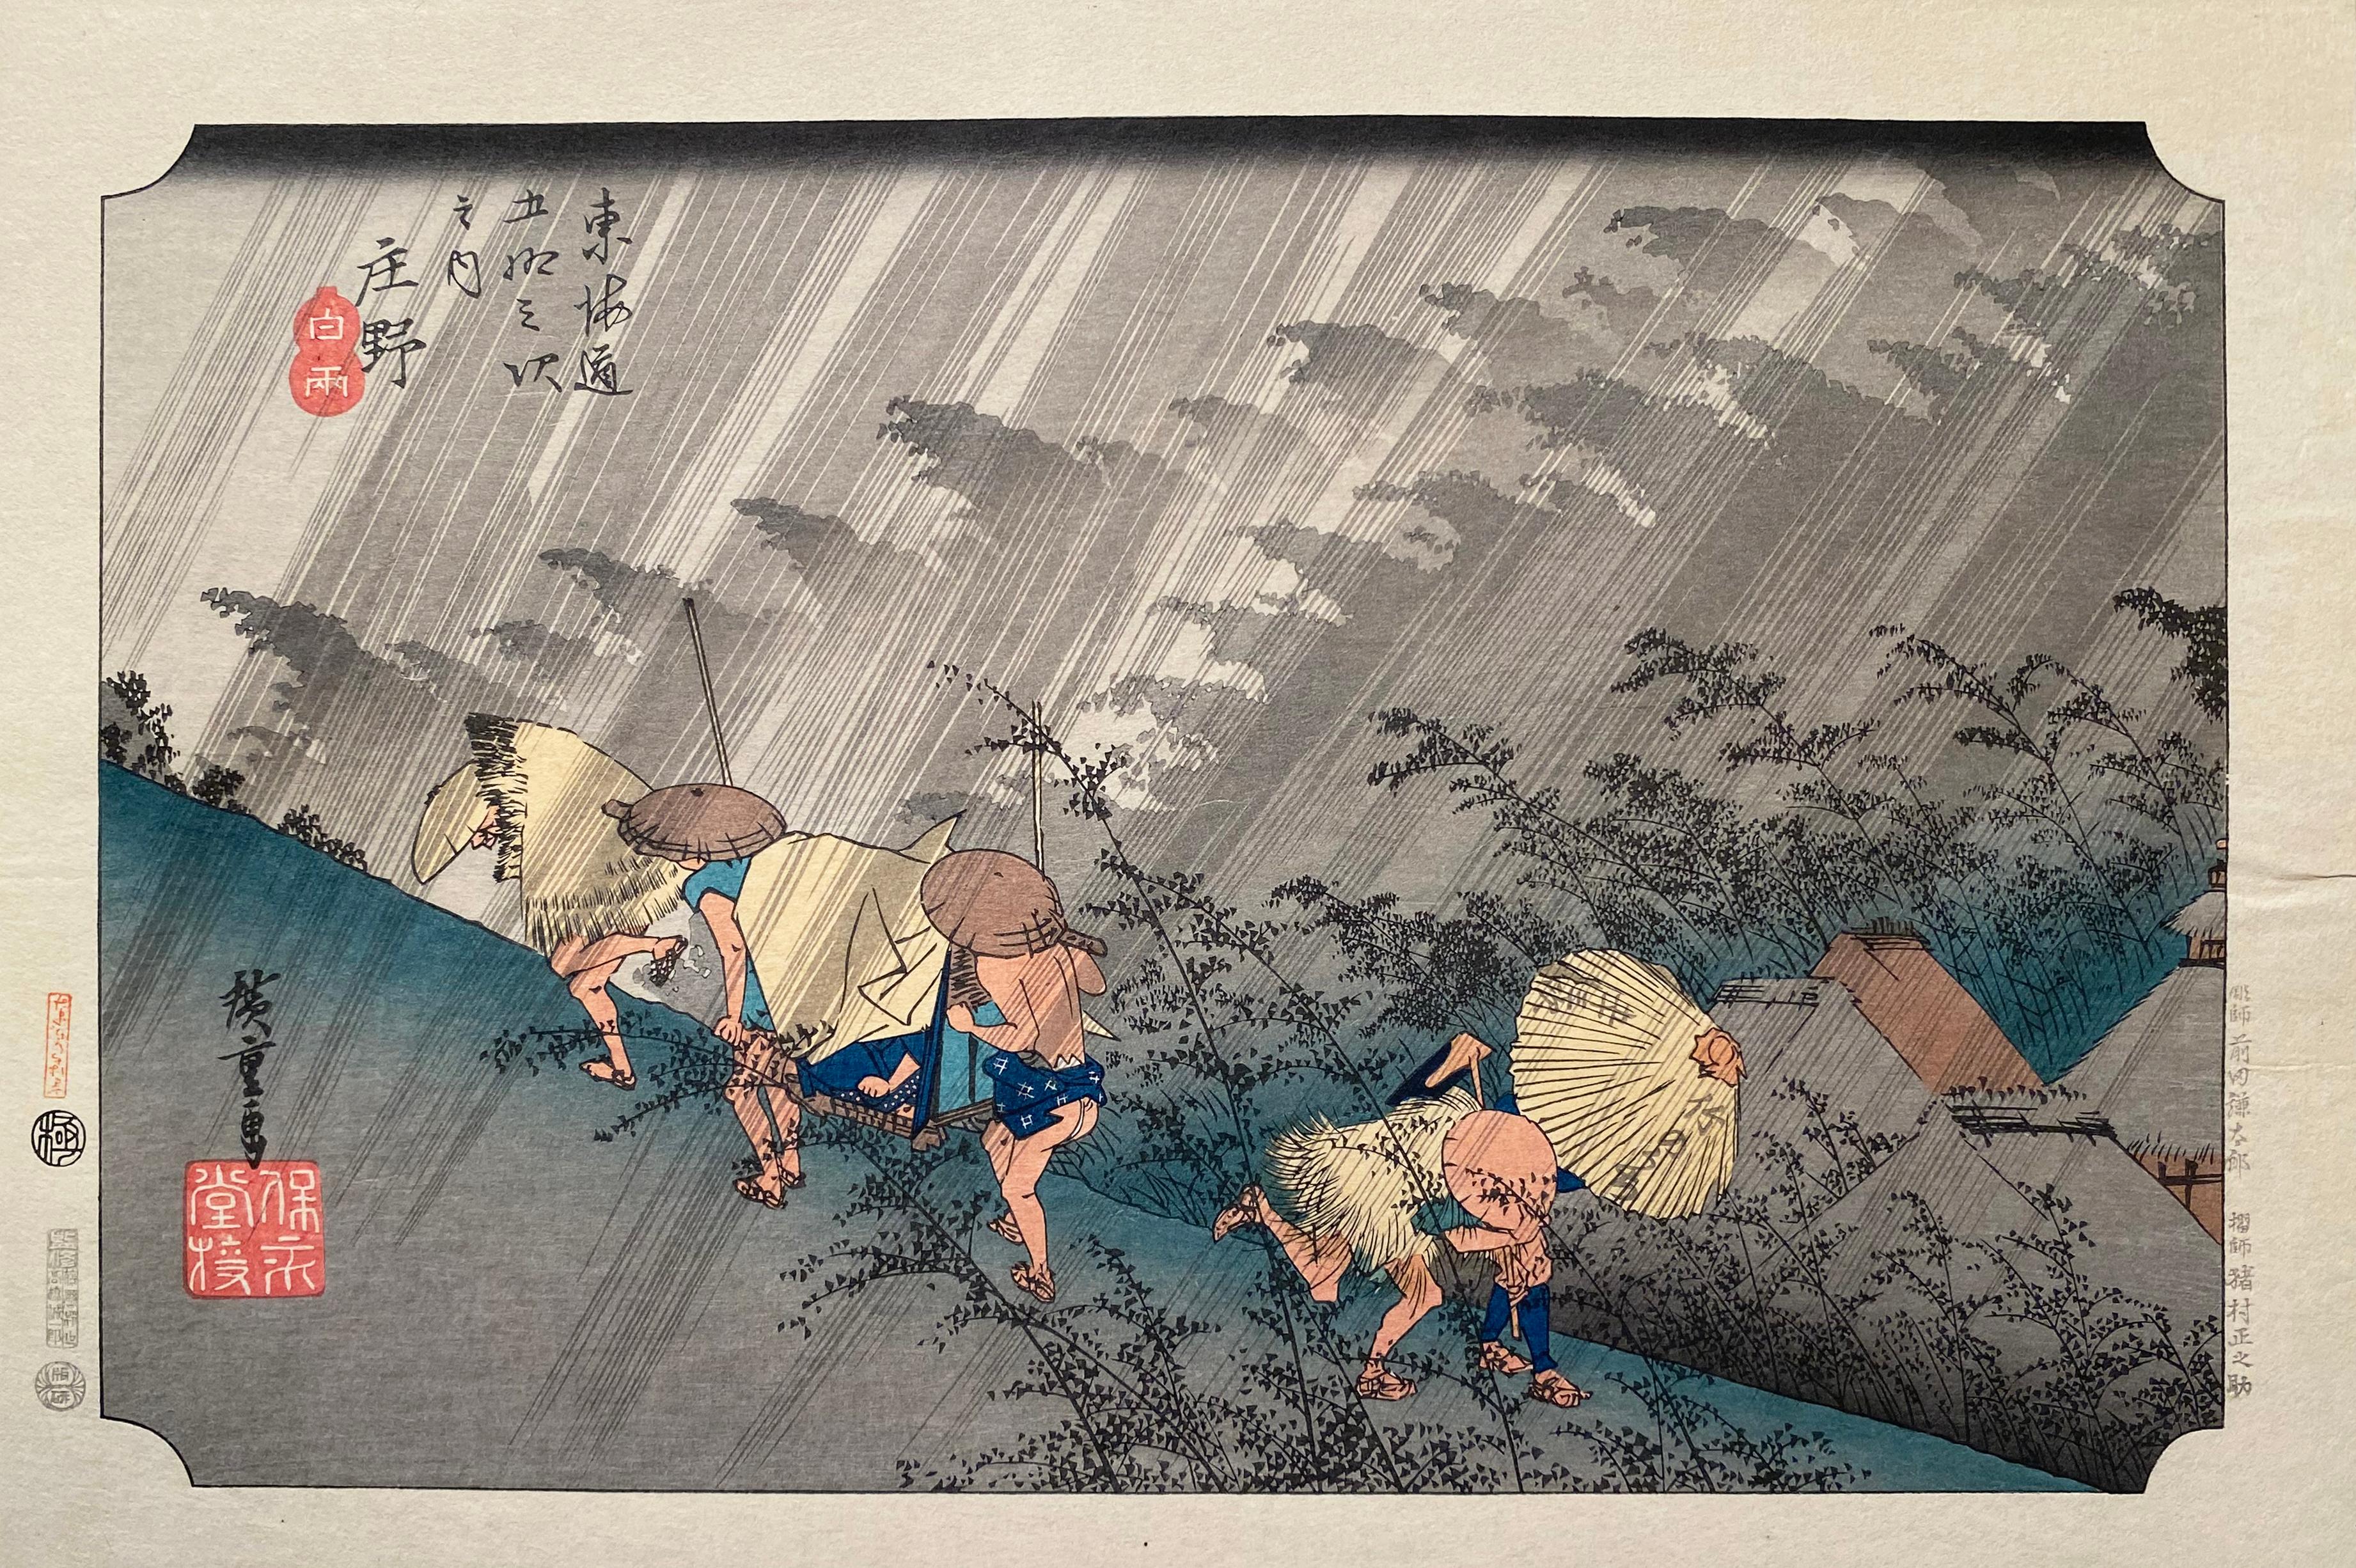 Utagawa Hiroshige (Ando Hiroshige) Landscape Print - 'Shono Rain', After Utagawa Hiroshige 歌川廣重, Ukiyo-e Woodblock, Tokaido